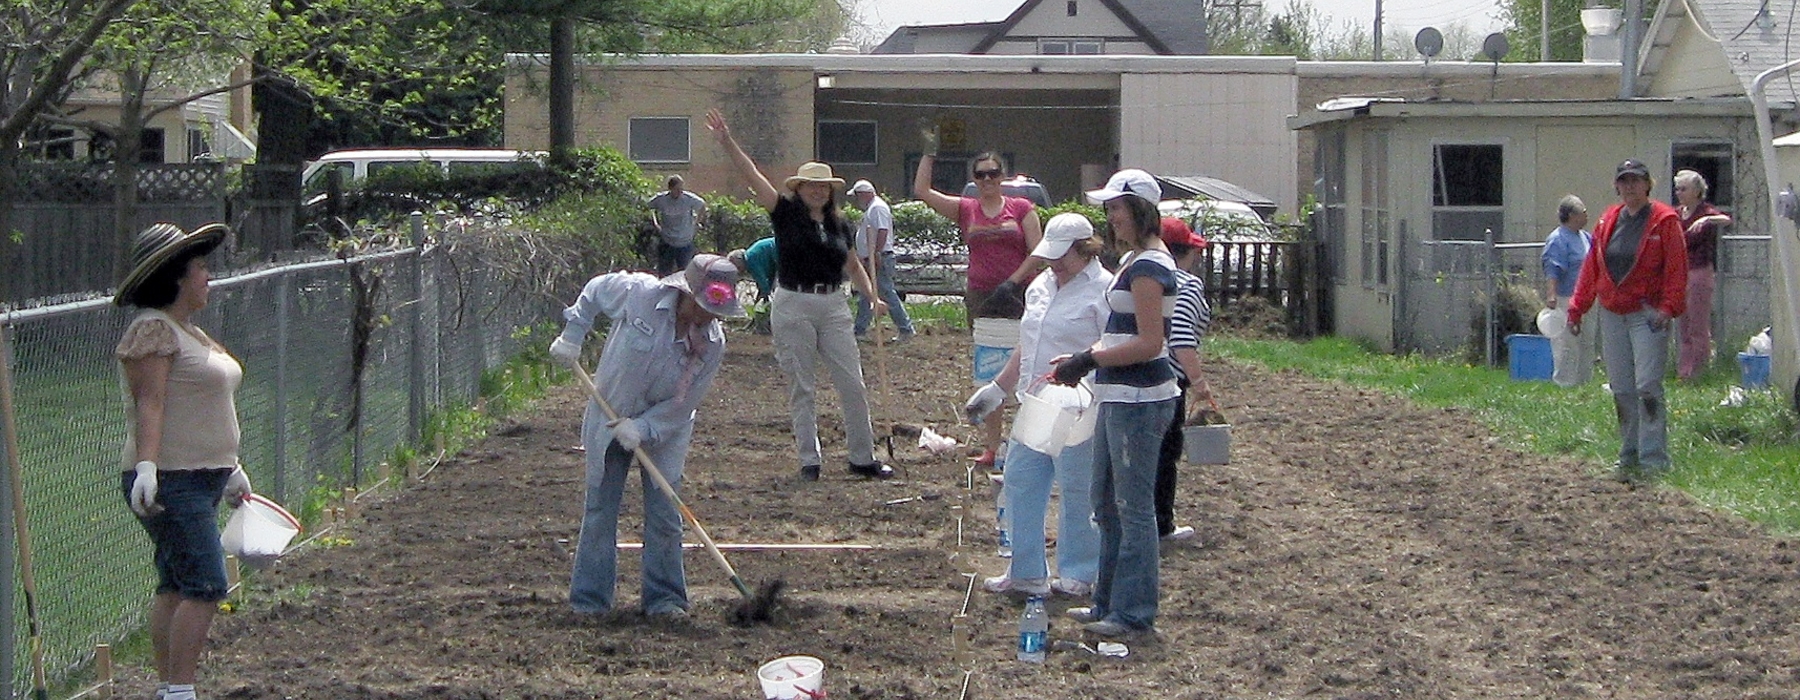 Jardiners que treballen al jardí comunitari